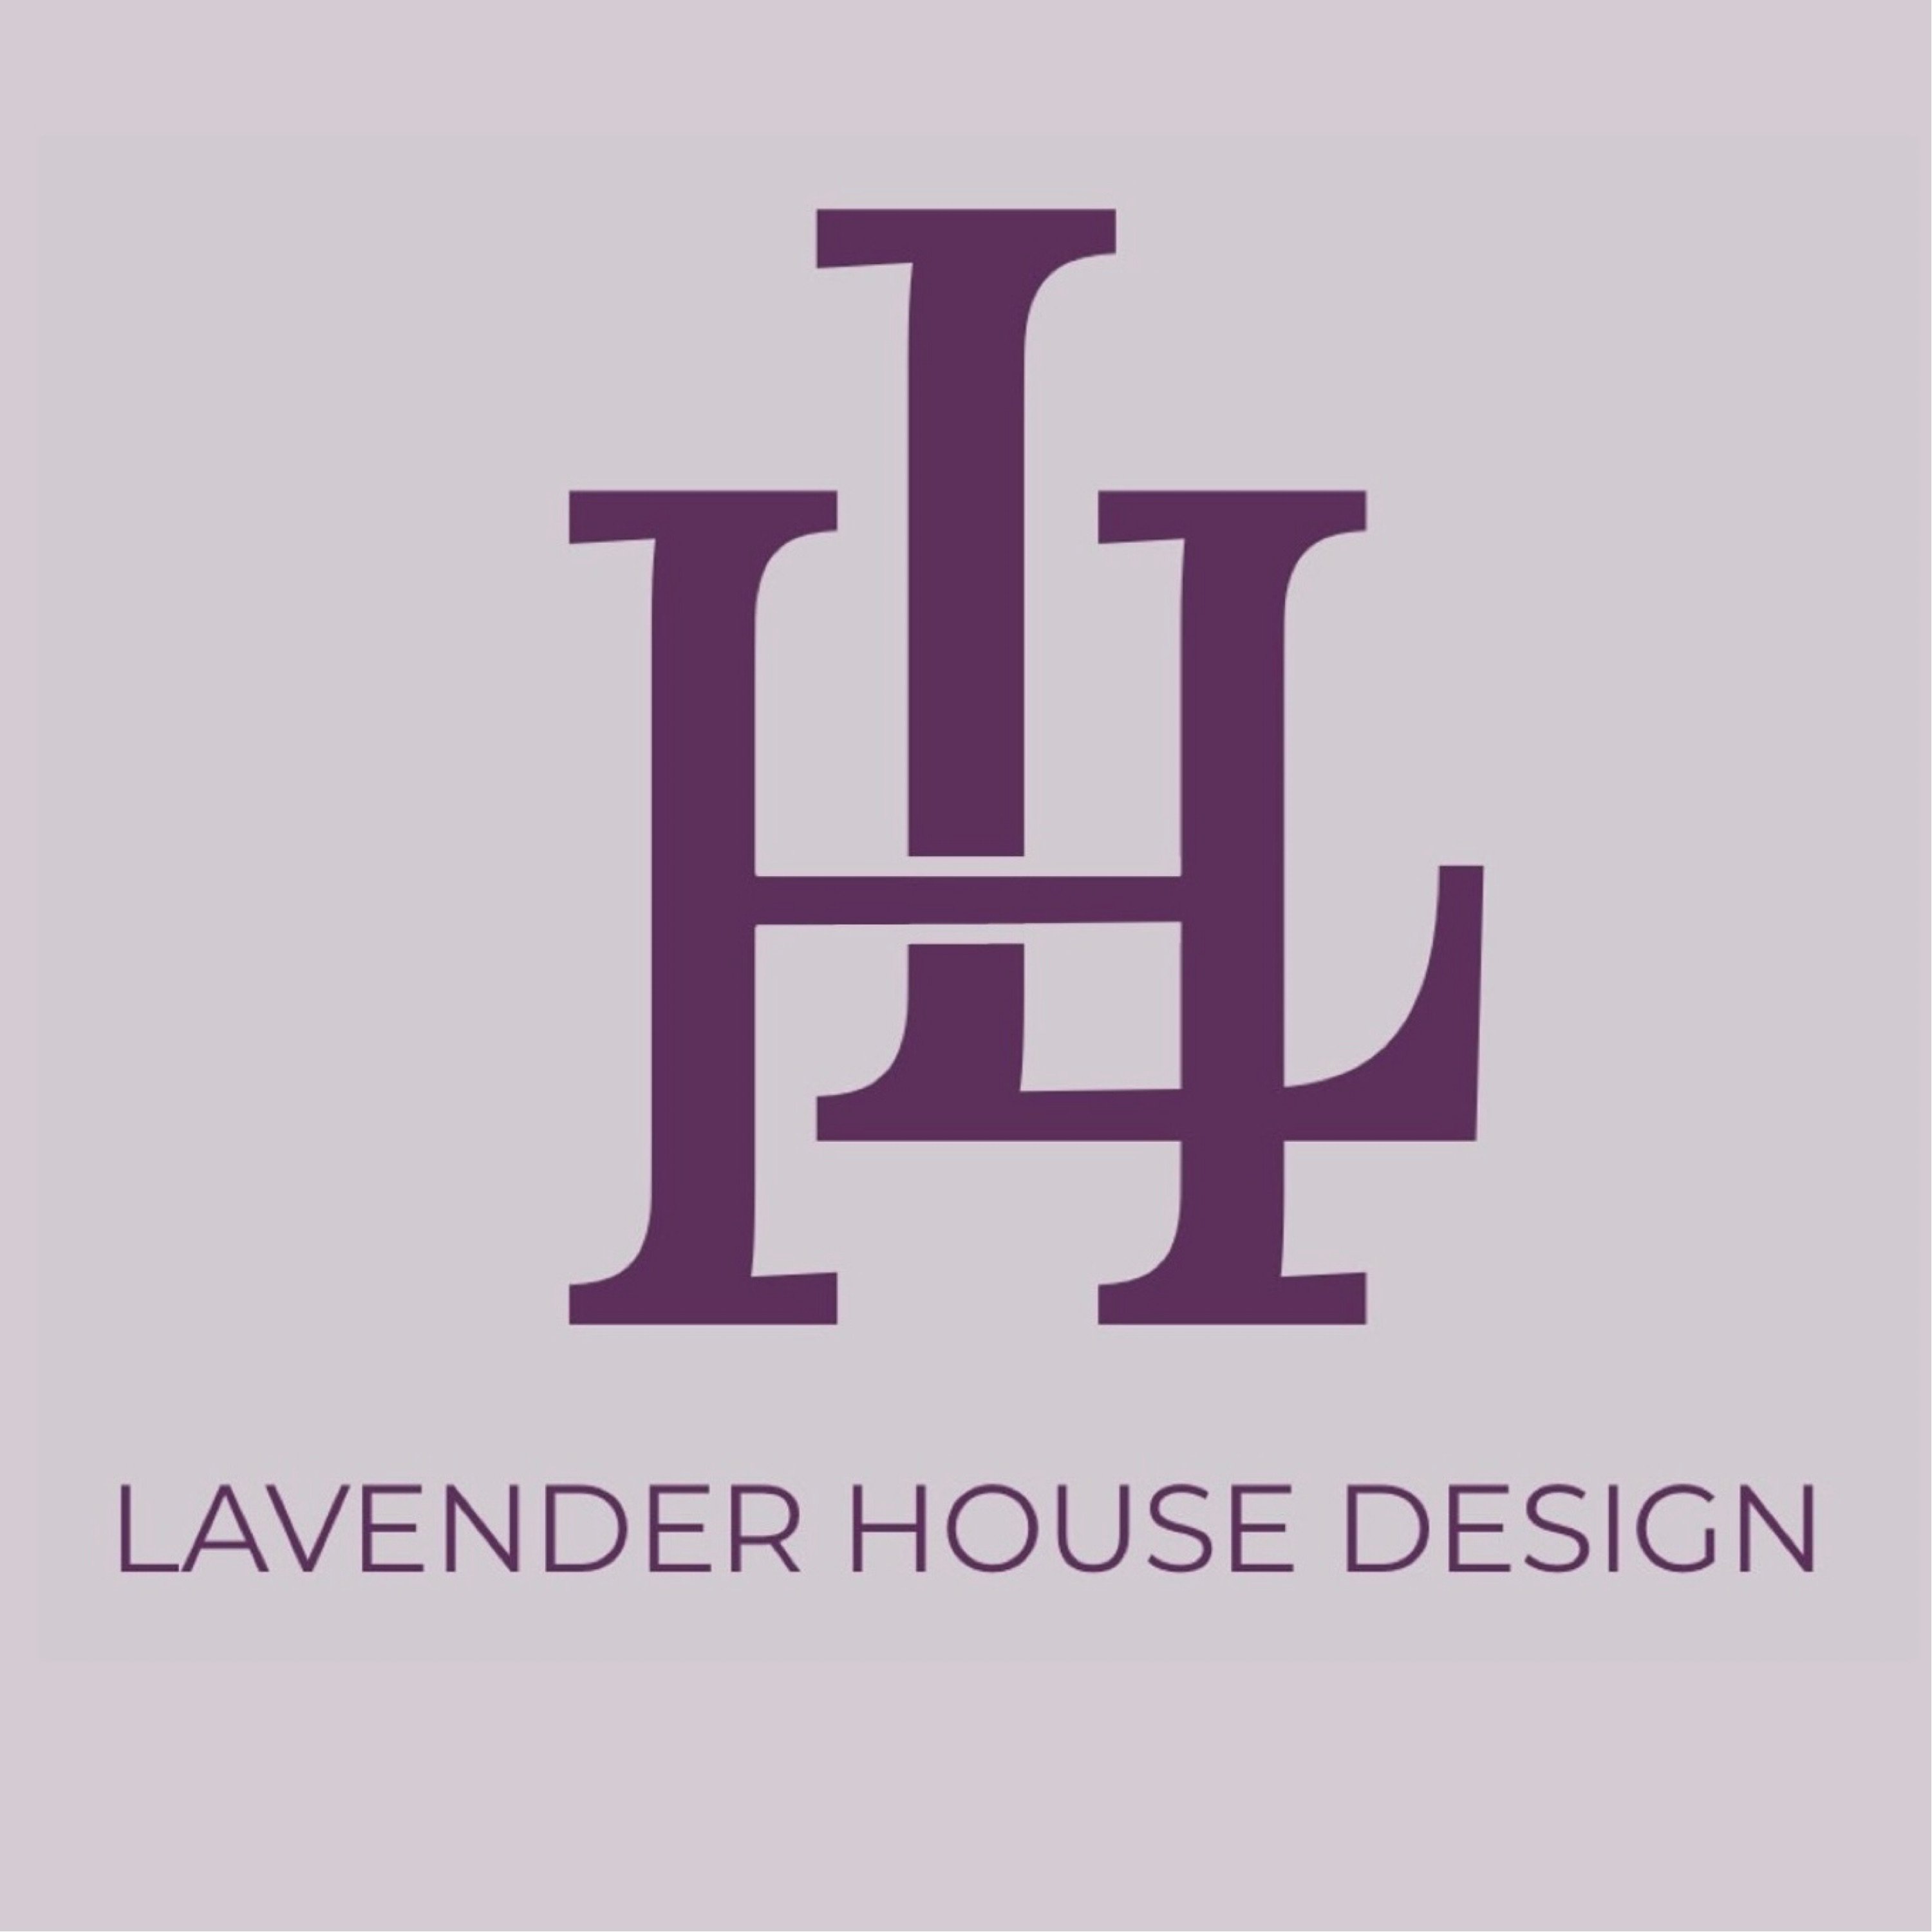 LAVENDER HOUSE DESIGN, LLC Logo